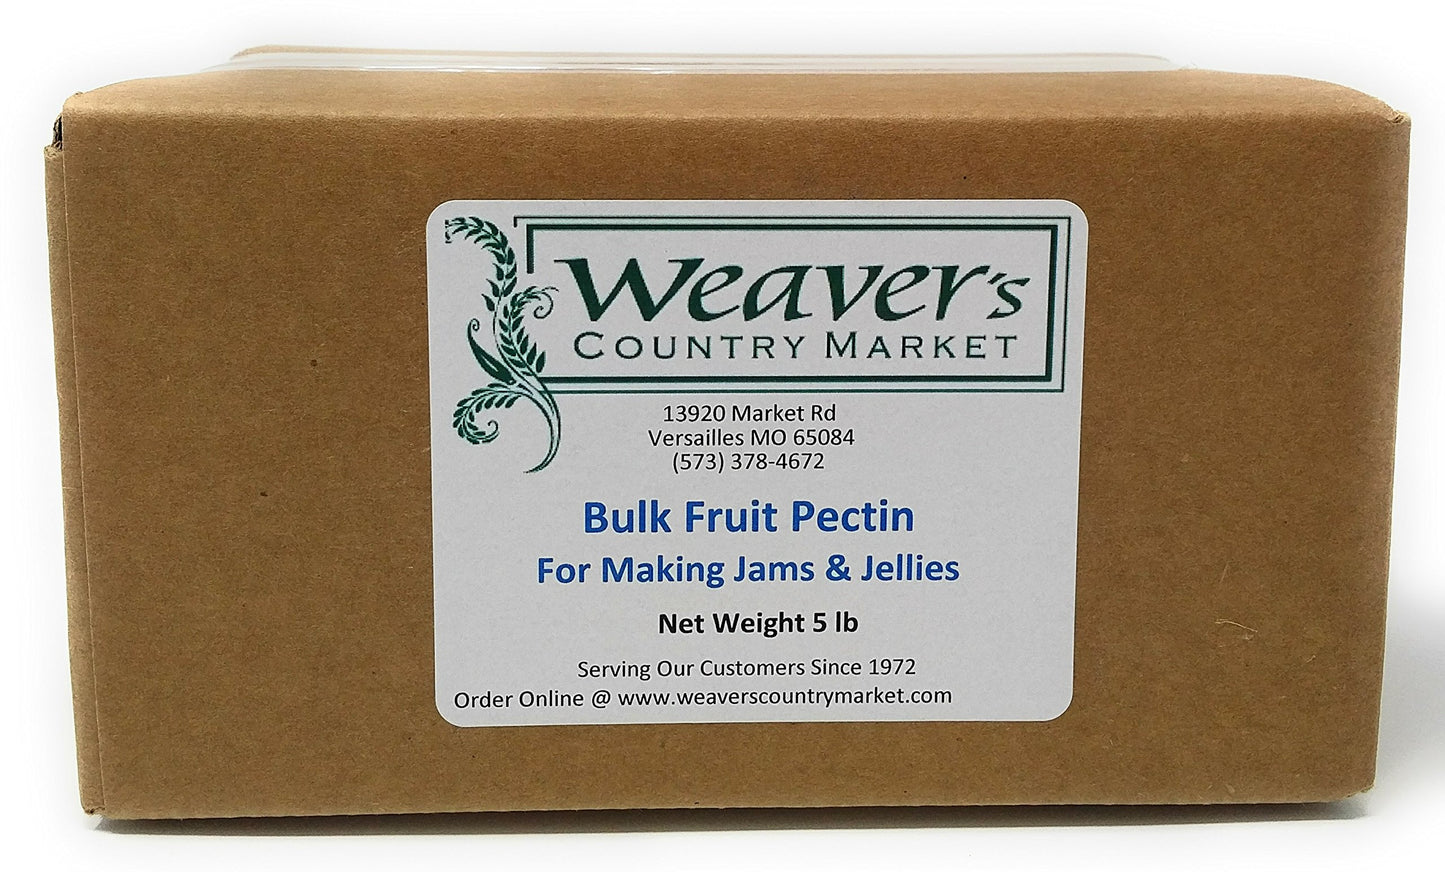 Weaver's Country Market Bulk Fruit Pectin Mix for Making Jams & Jellies